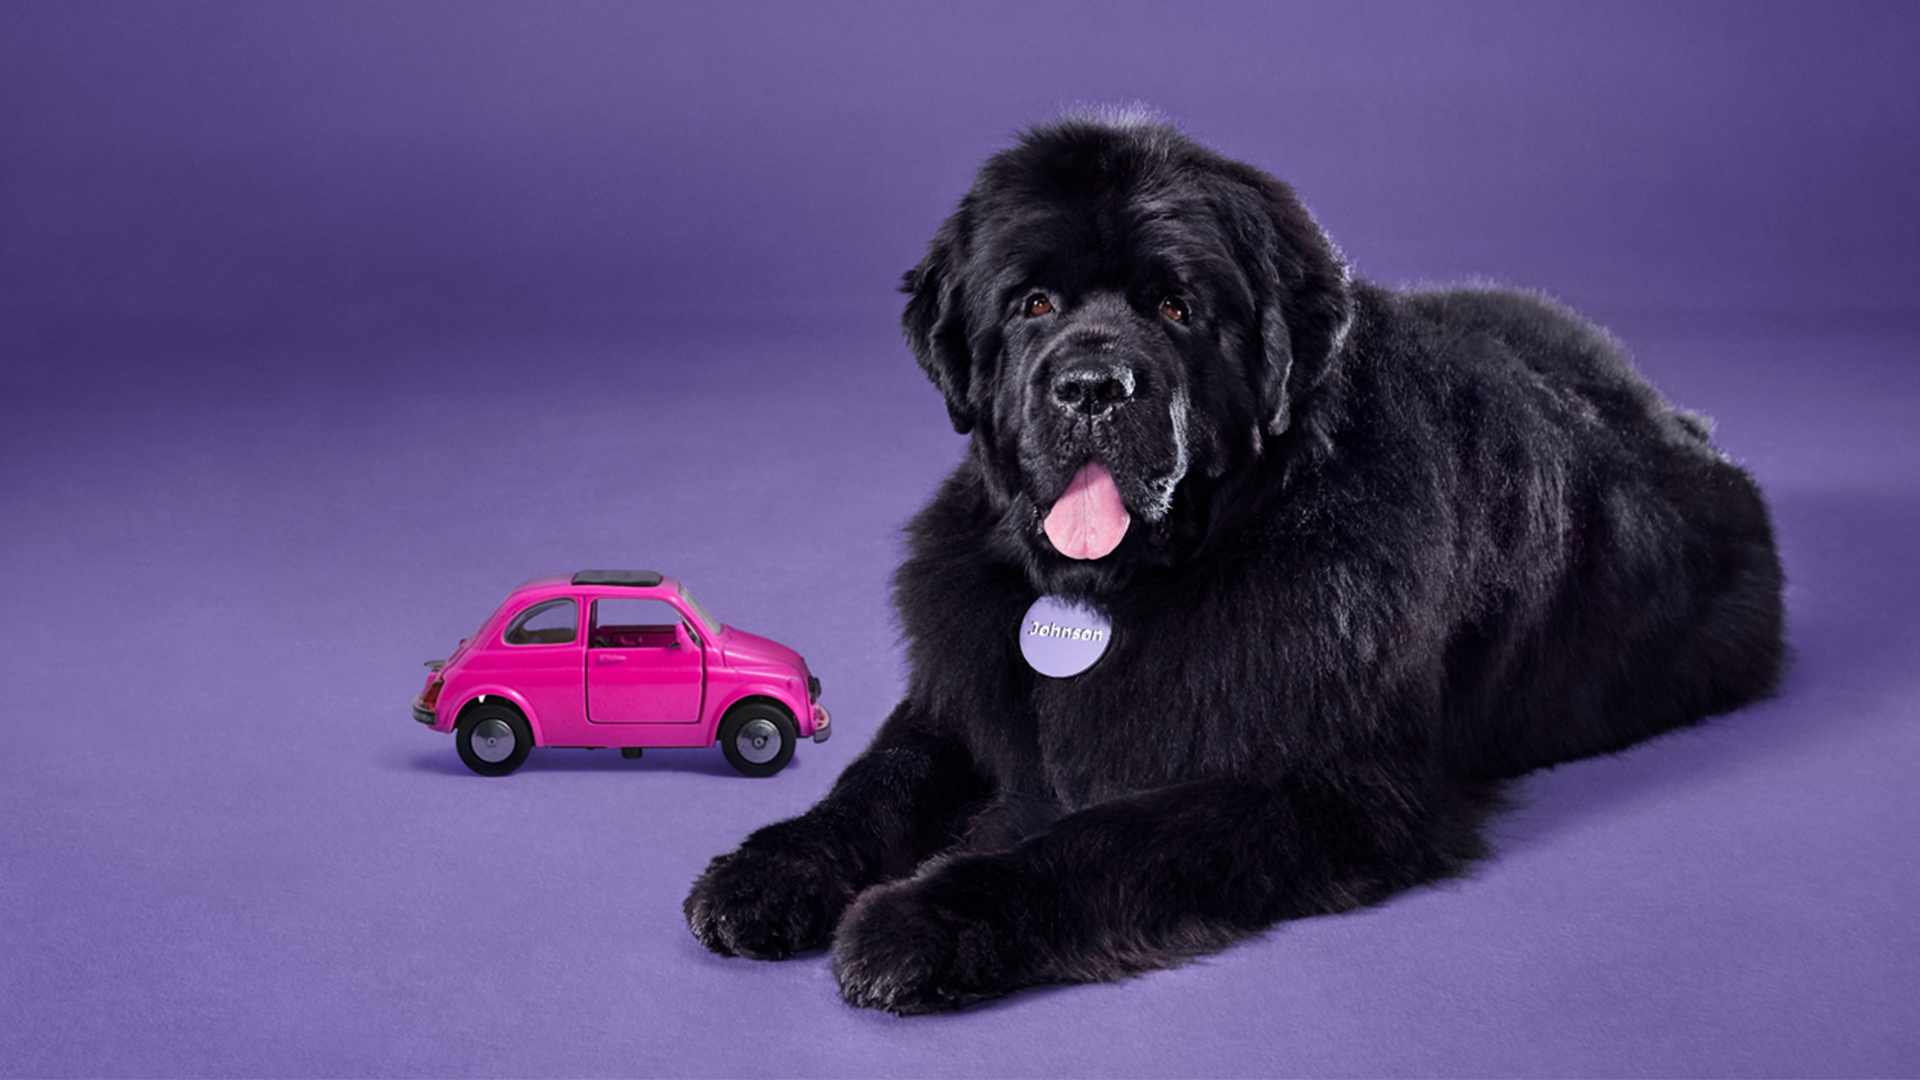 Johnson, a large black Newfoundland dog, beside a small pink car on a purple background